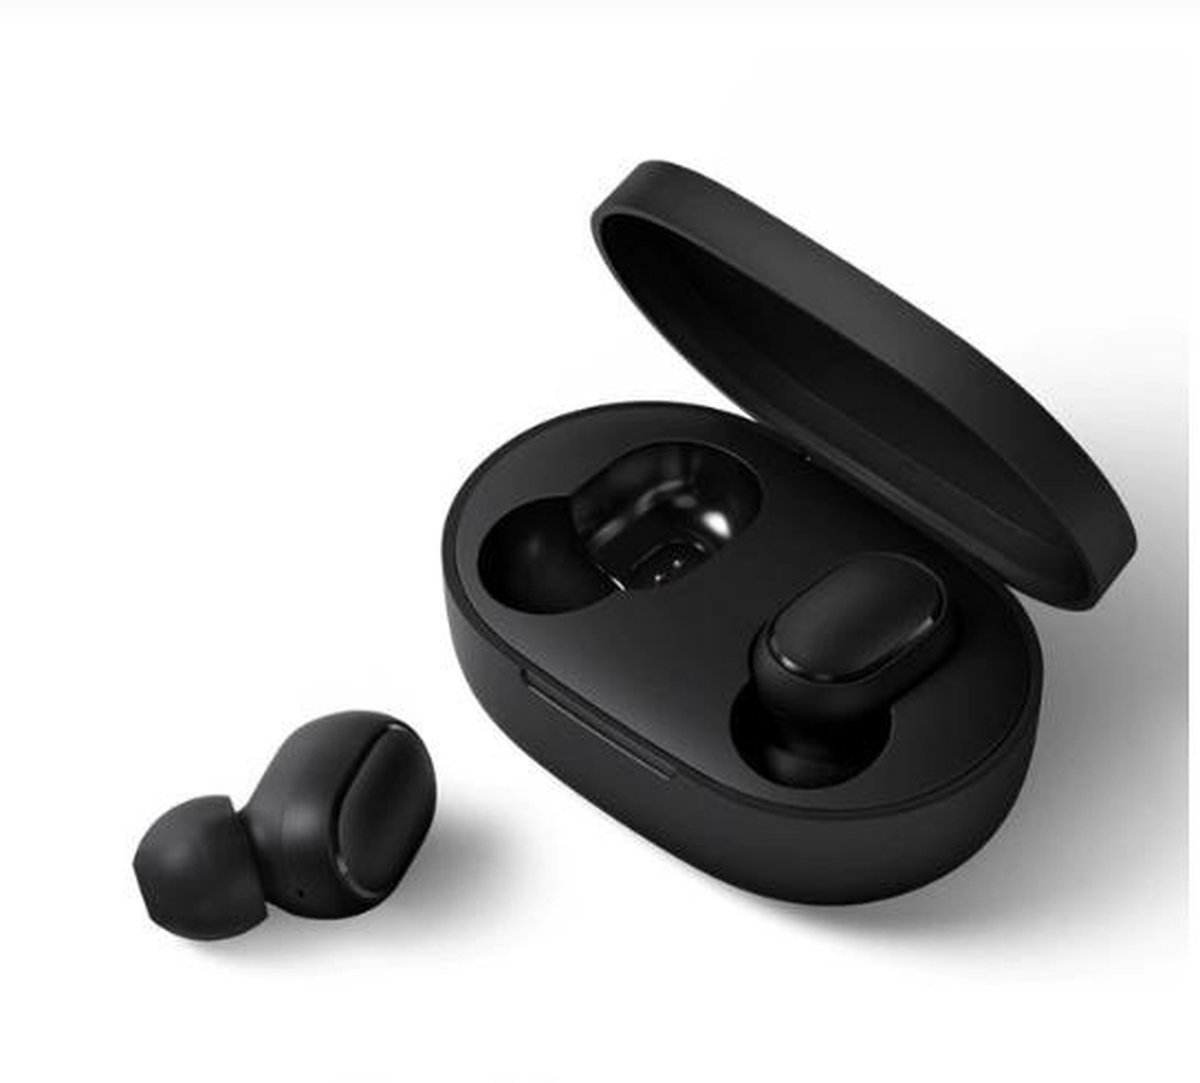 Premium Draadloze Oordopjes - Bluetooth Airdots - Draadloze Oortjes - Earphones - Bluetooth 5.0 Earbuds - Waterproof